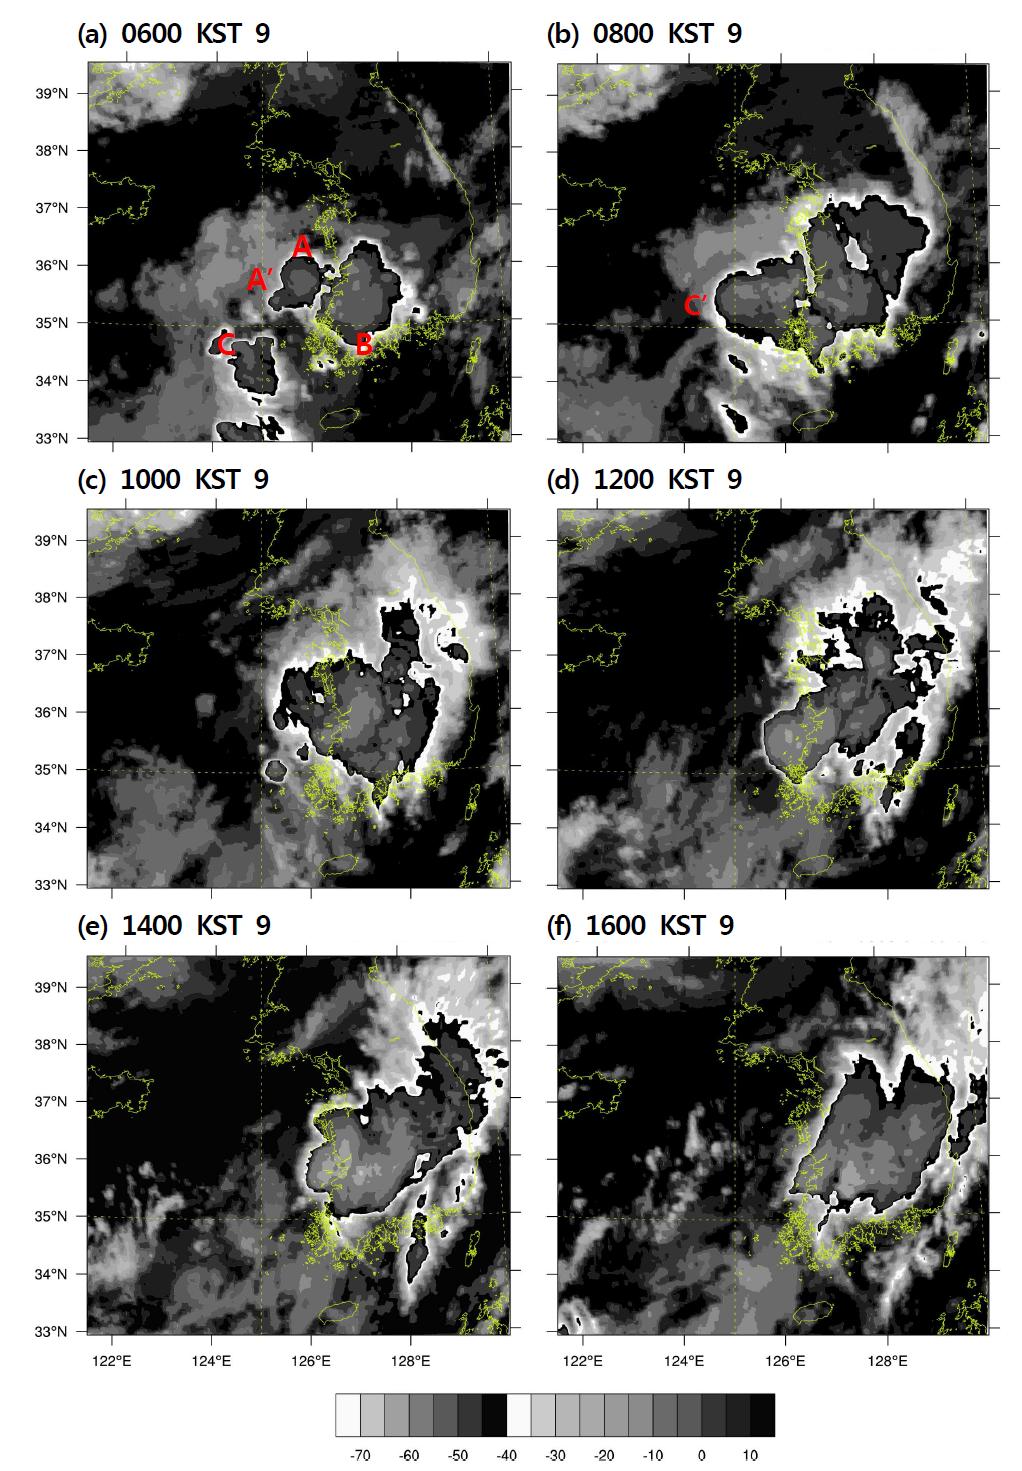 Enhanced IR images for 0600 KST 9 through 1600 KST 9 August 2011.